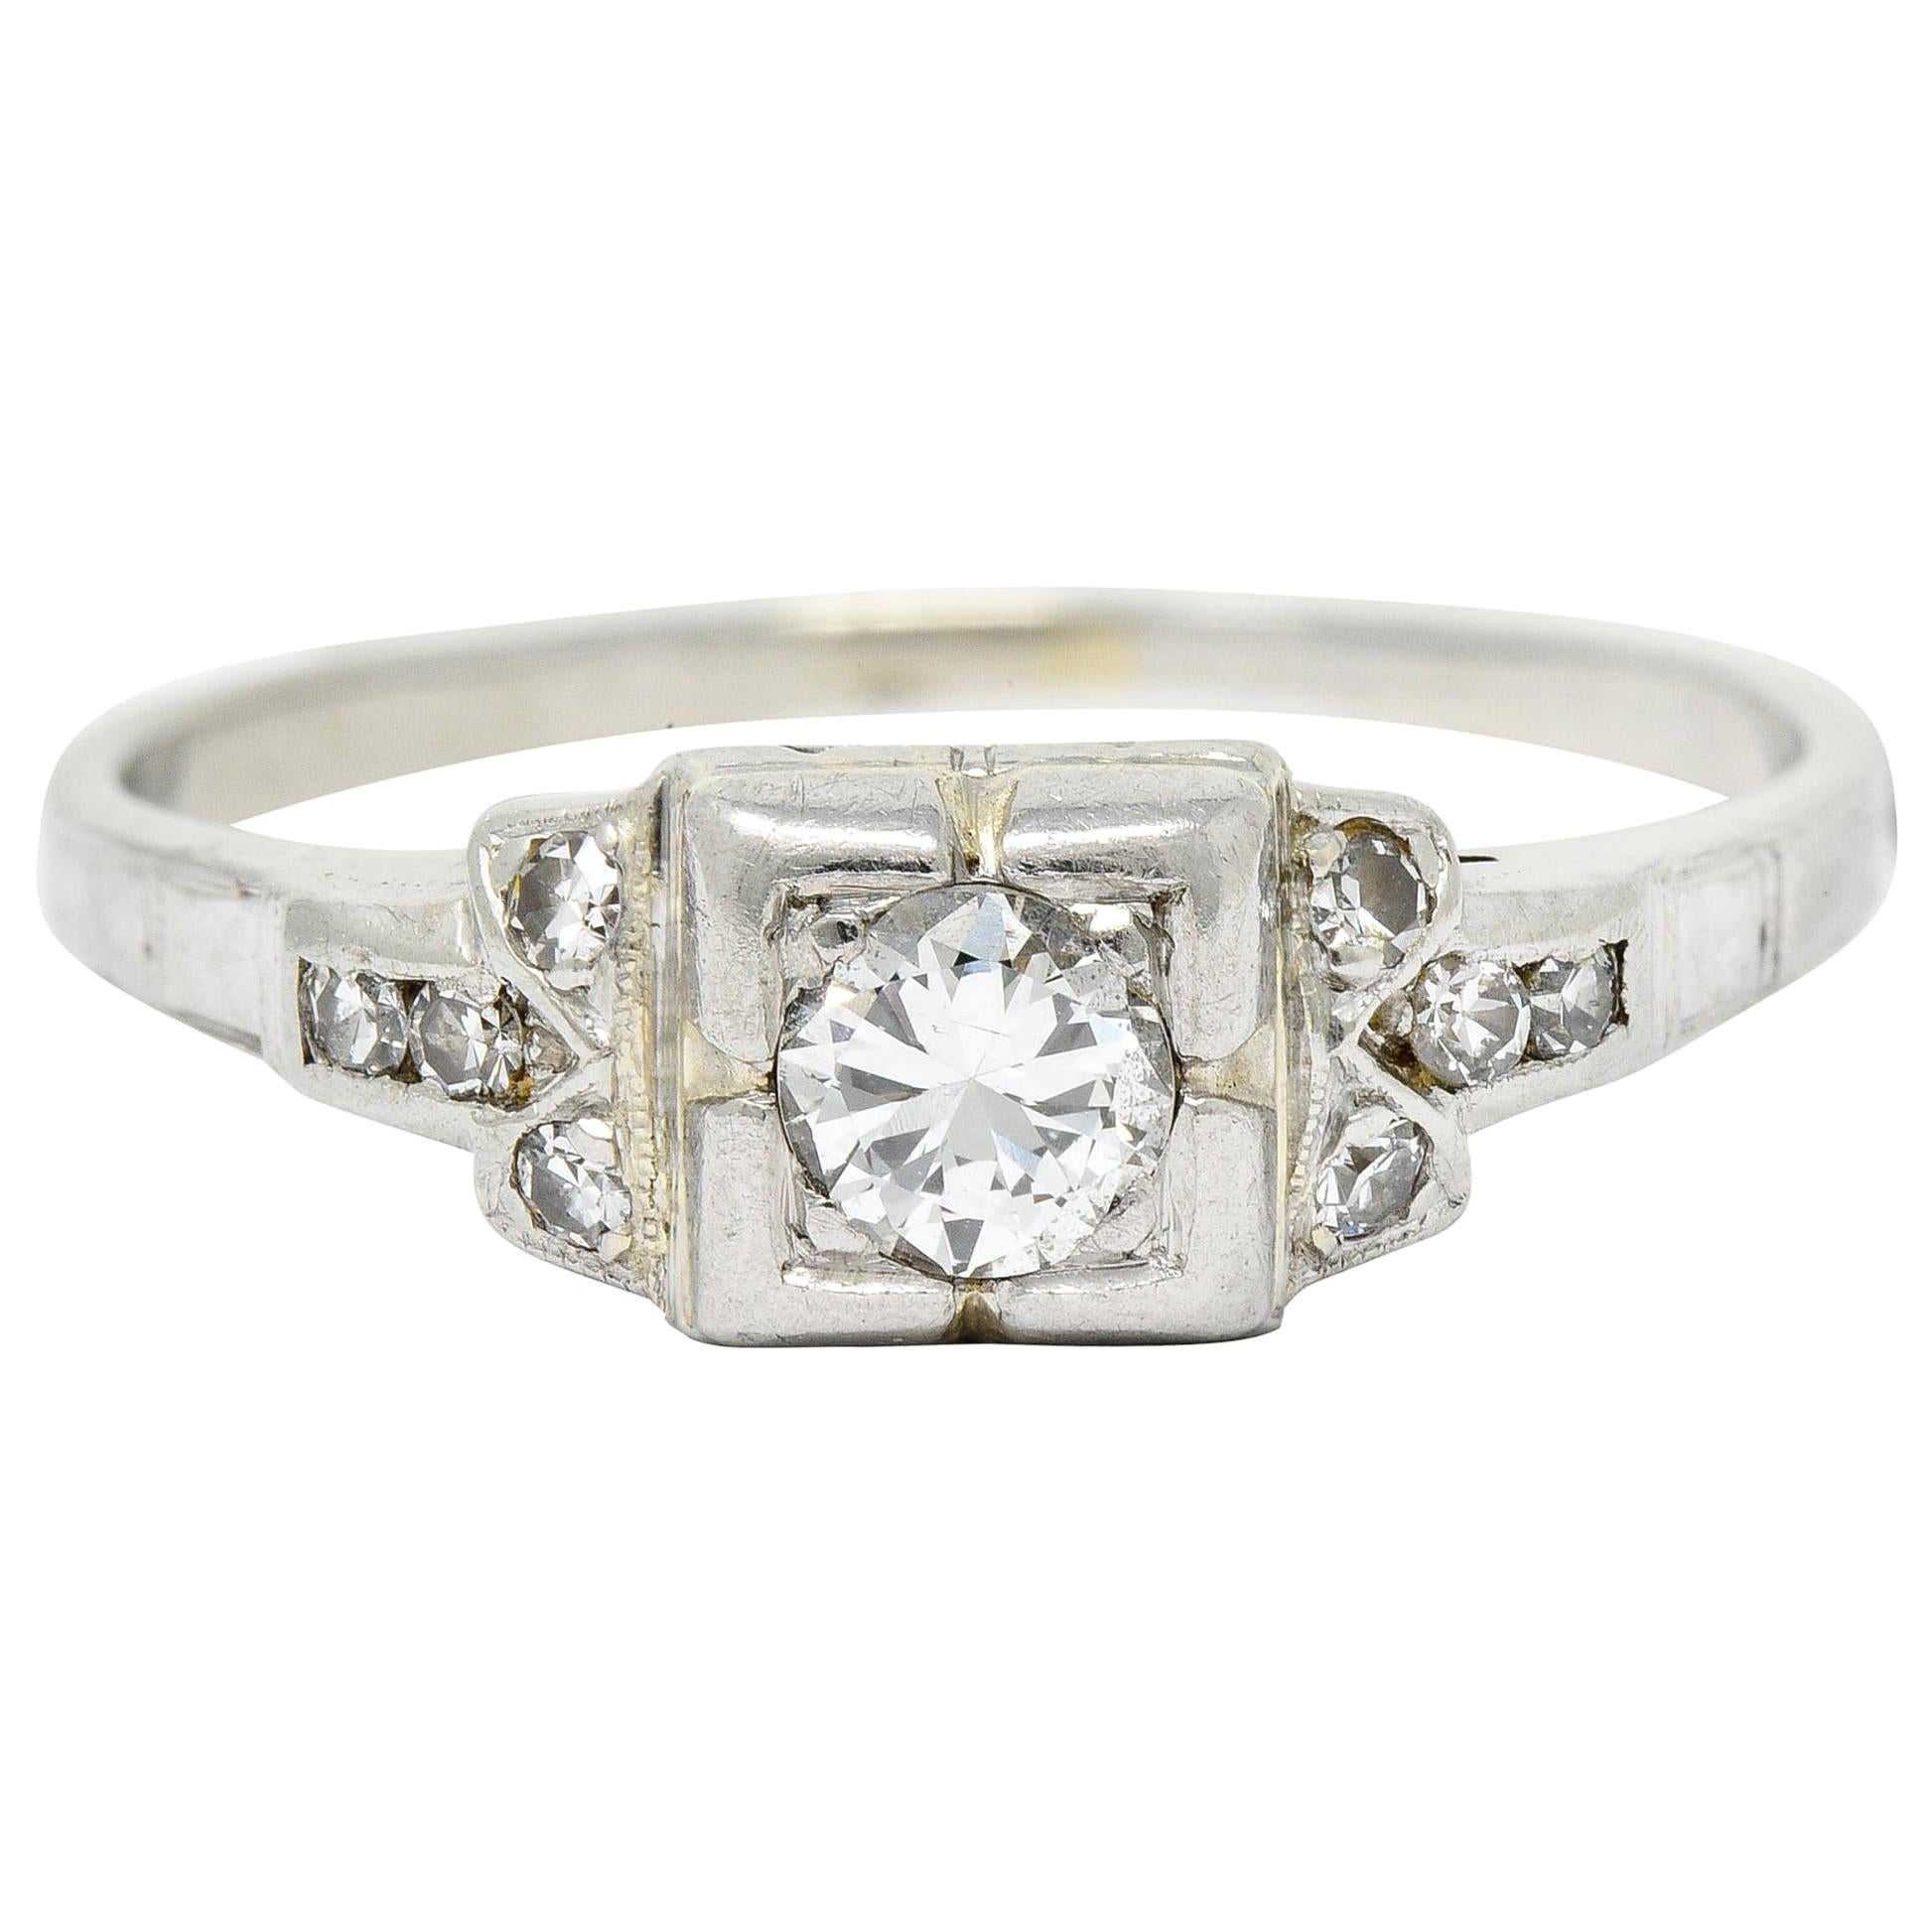 Early Retro 0.35 Carat Diamond Platinum Square Form Engagement Ring